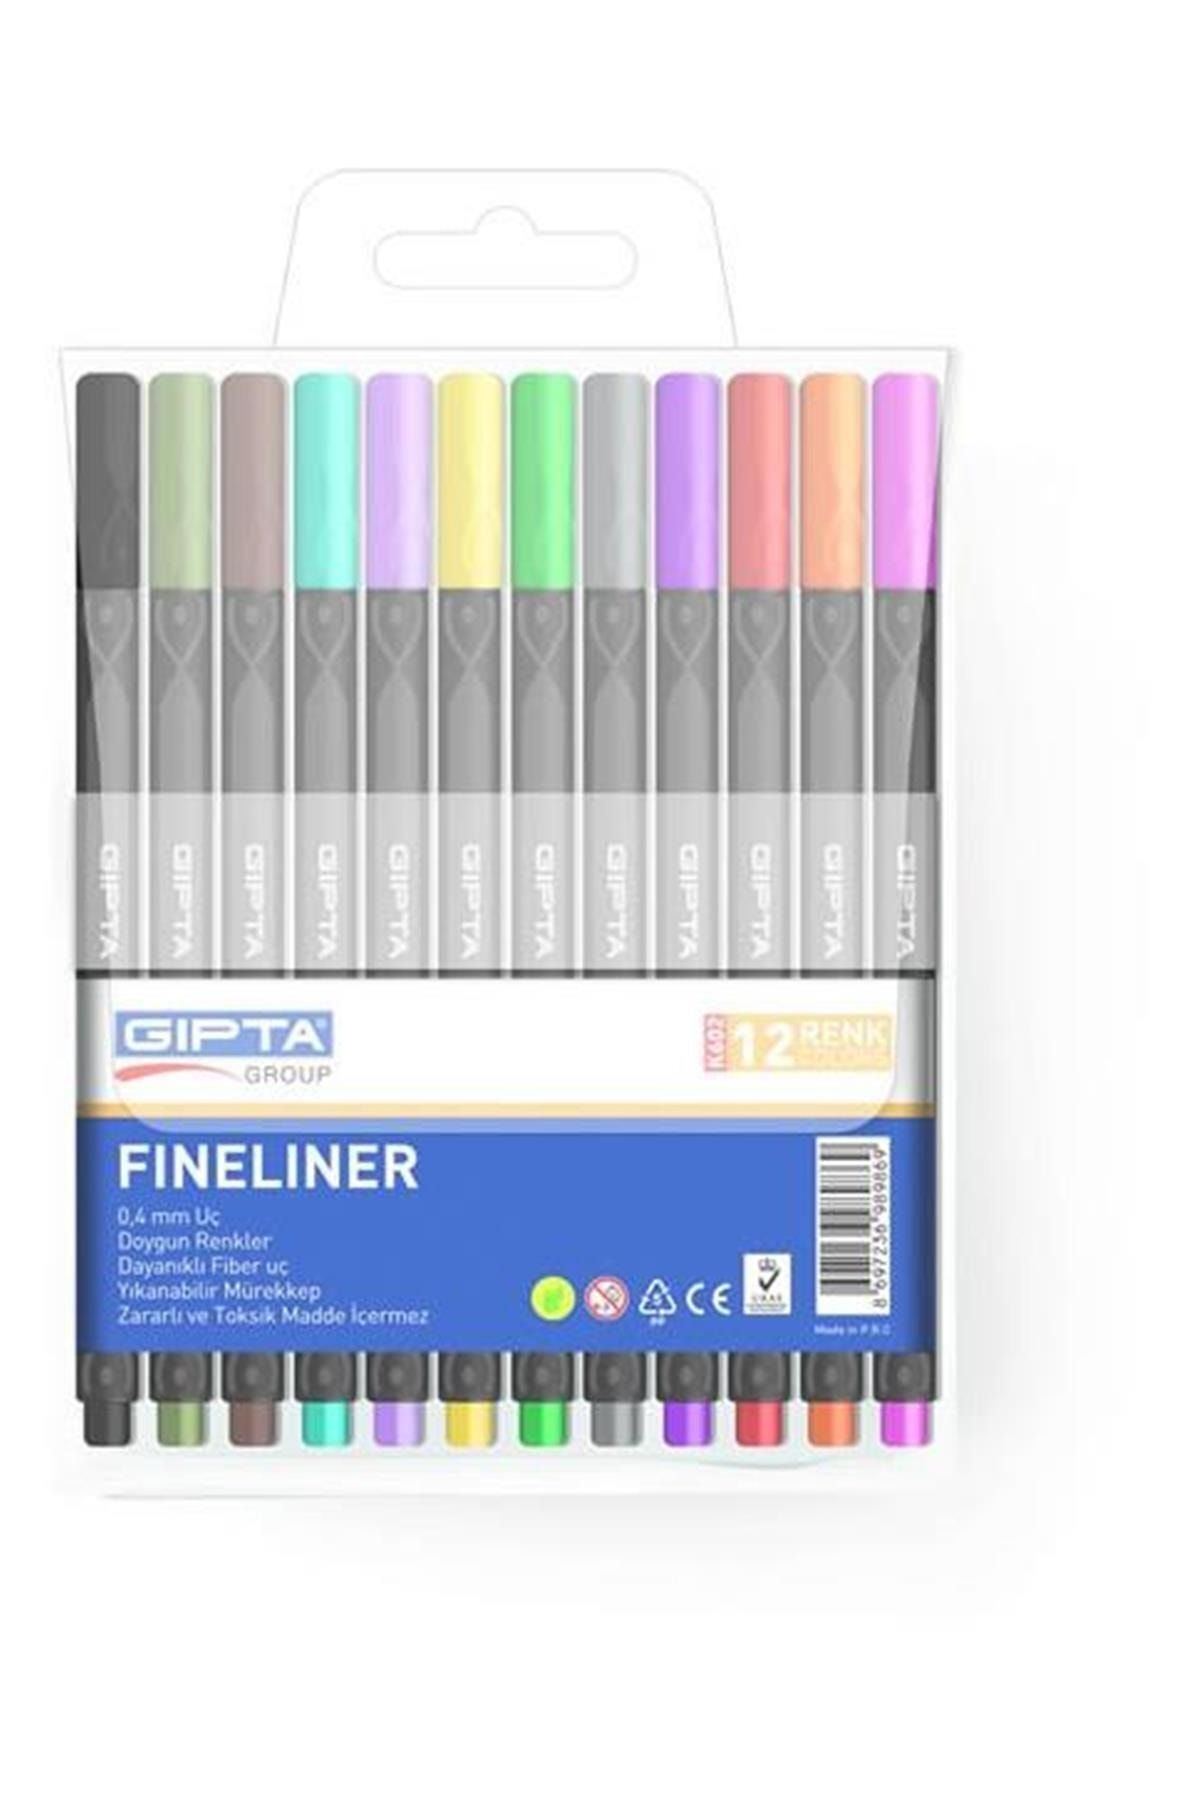 Gıpta Gipta Fineliner Kalem 0,4 Mm 12 Renk K6020 Kategori: Kurşun Kalemler